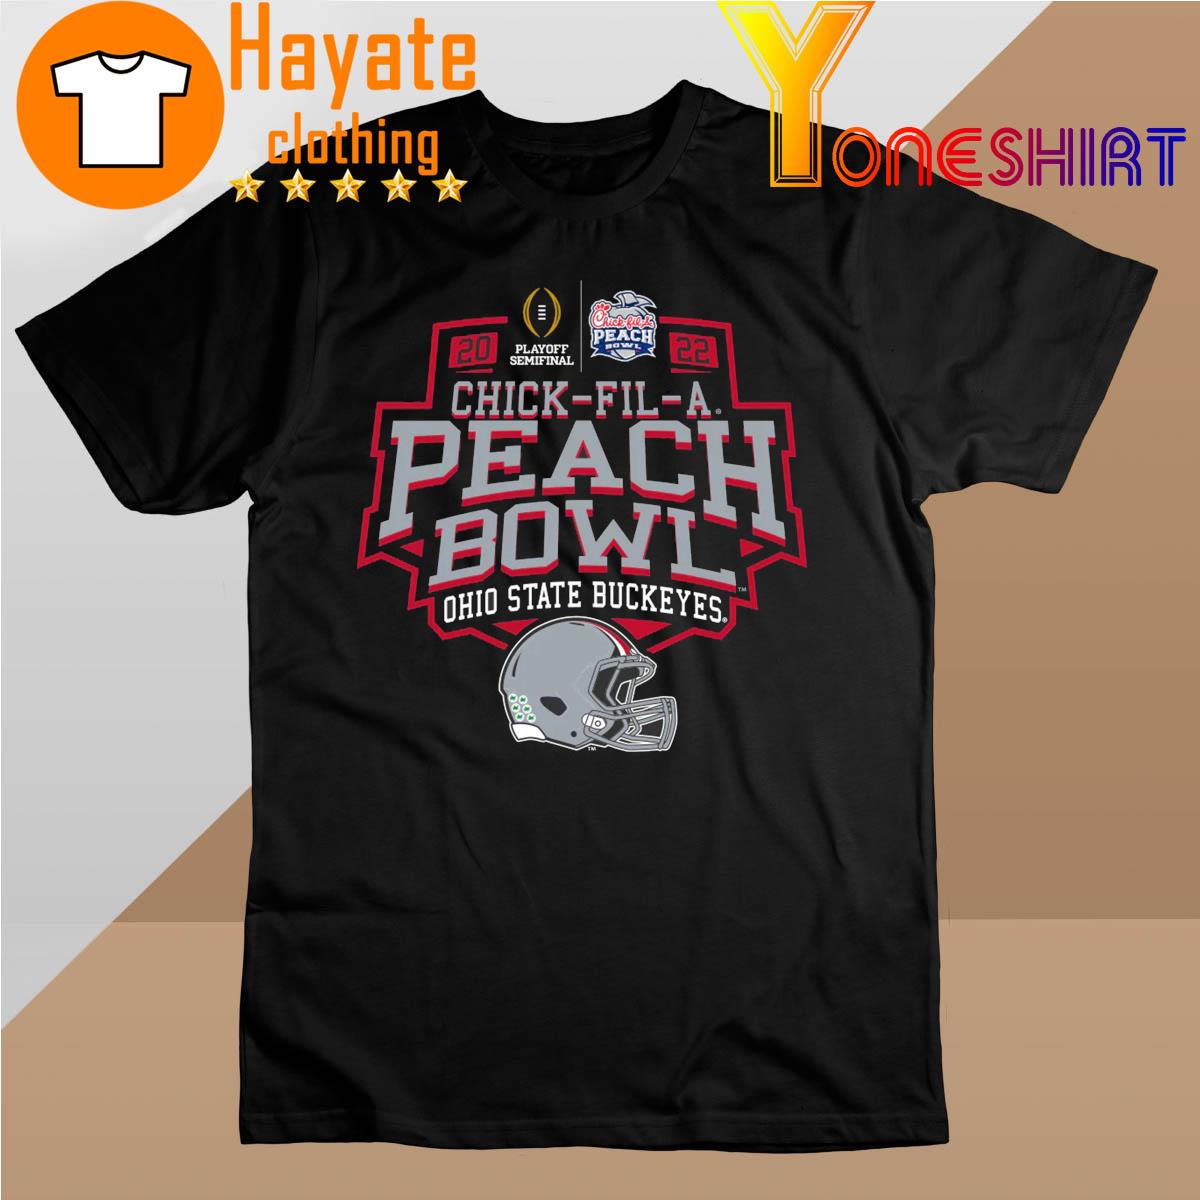 2022 Playoff Semifinal Chick-Fil-A Peach Bowl Ohio State Buckeyes shirt